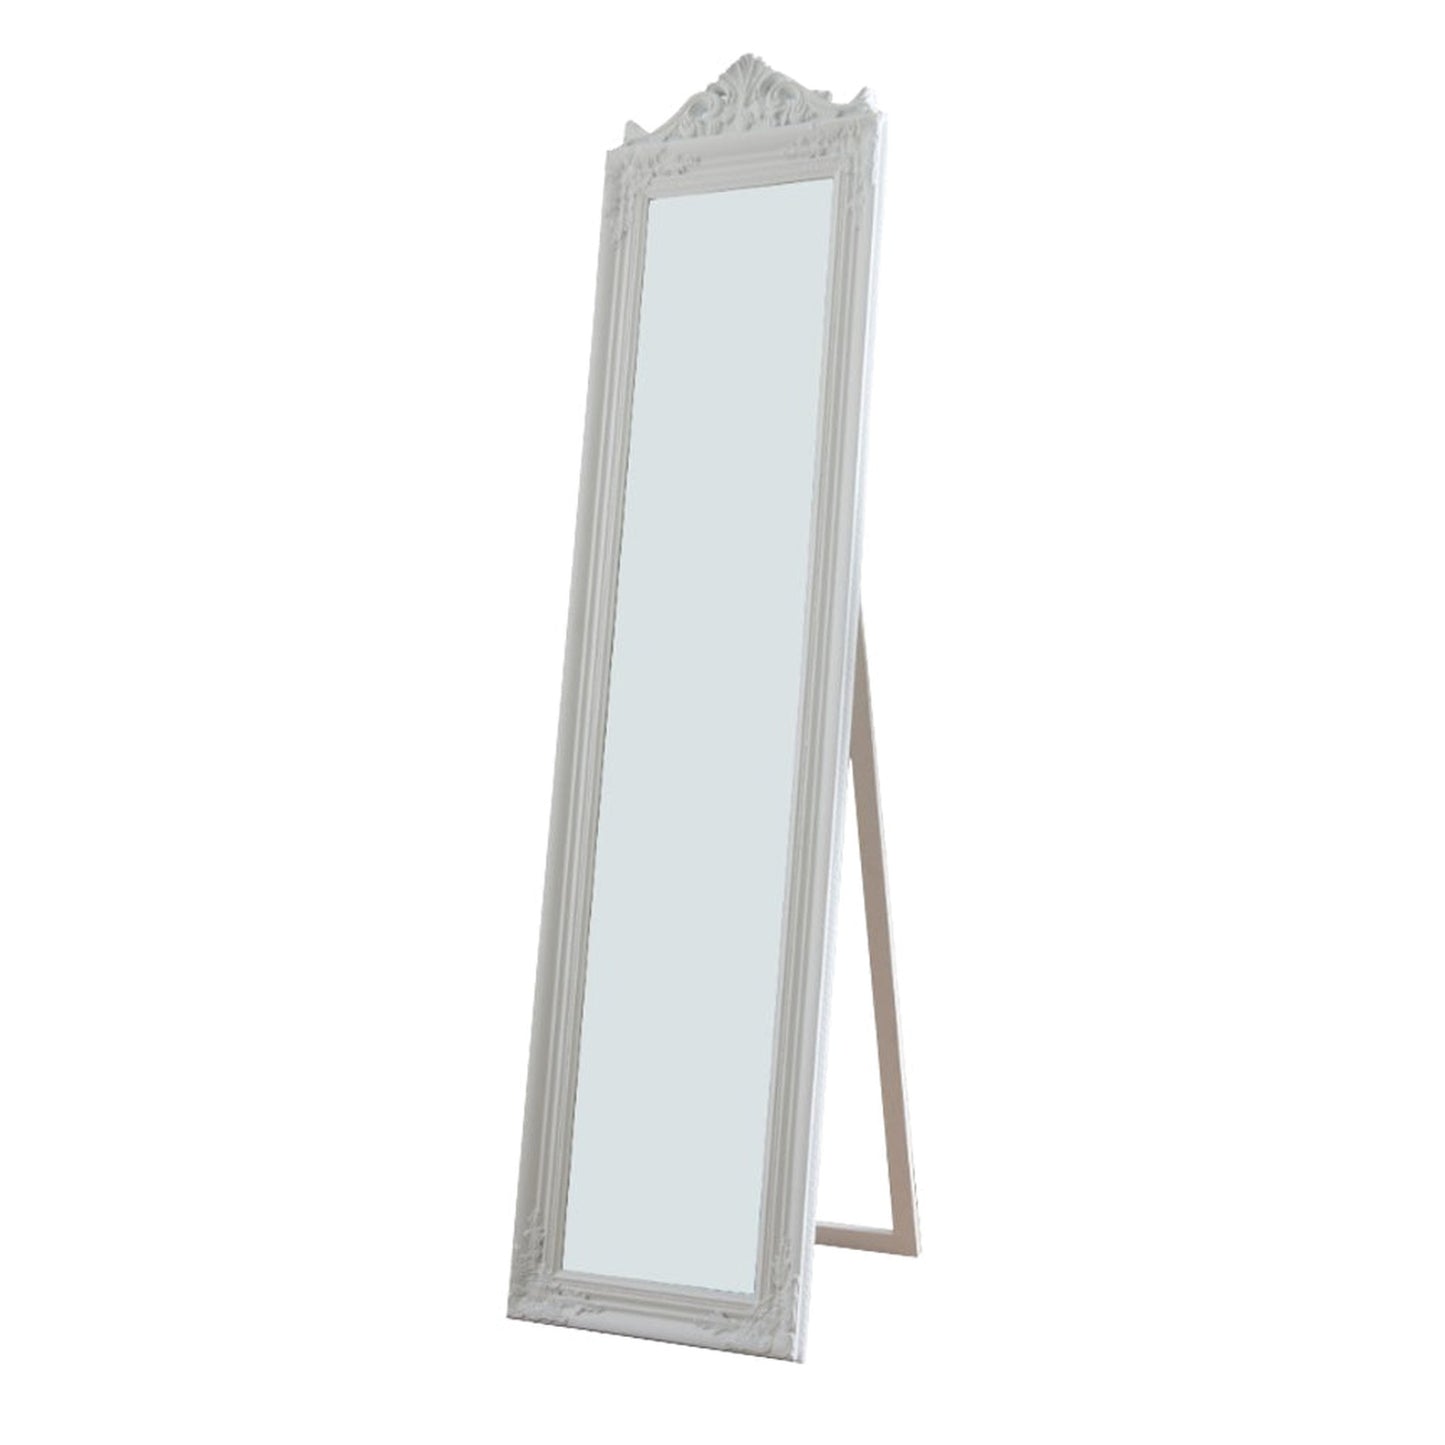 Benzara Camilla 71" White Full Length Standing Mirror With Decorative Design